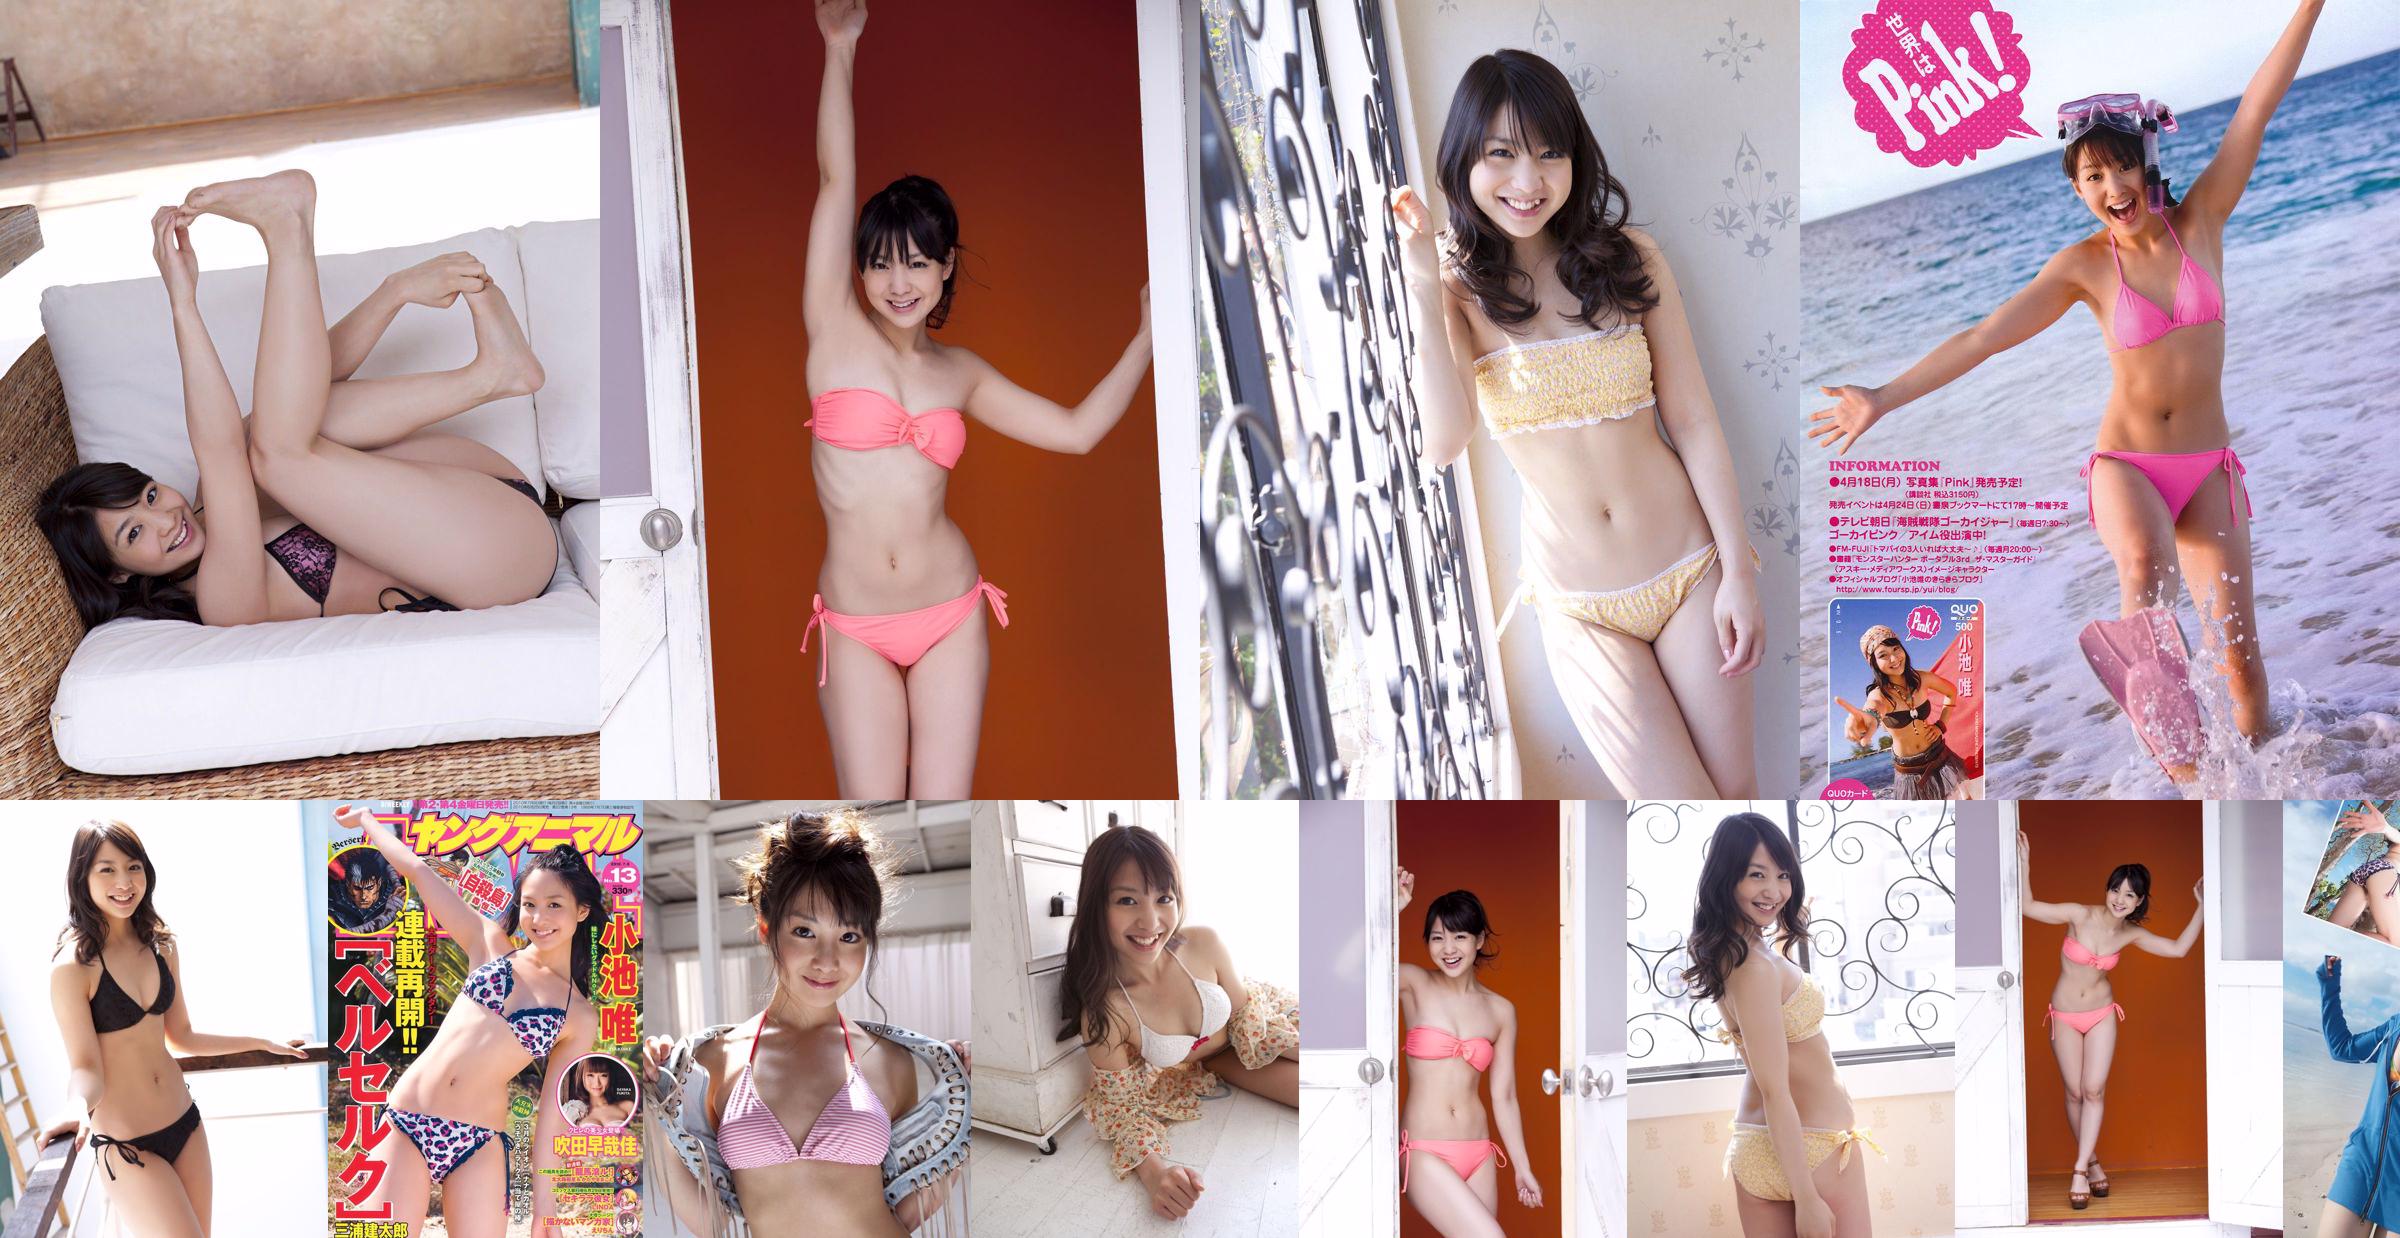 Yui Koike "FOREVER 21" [Sabra.net] Cover Girl No.7b4742 Page 20